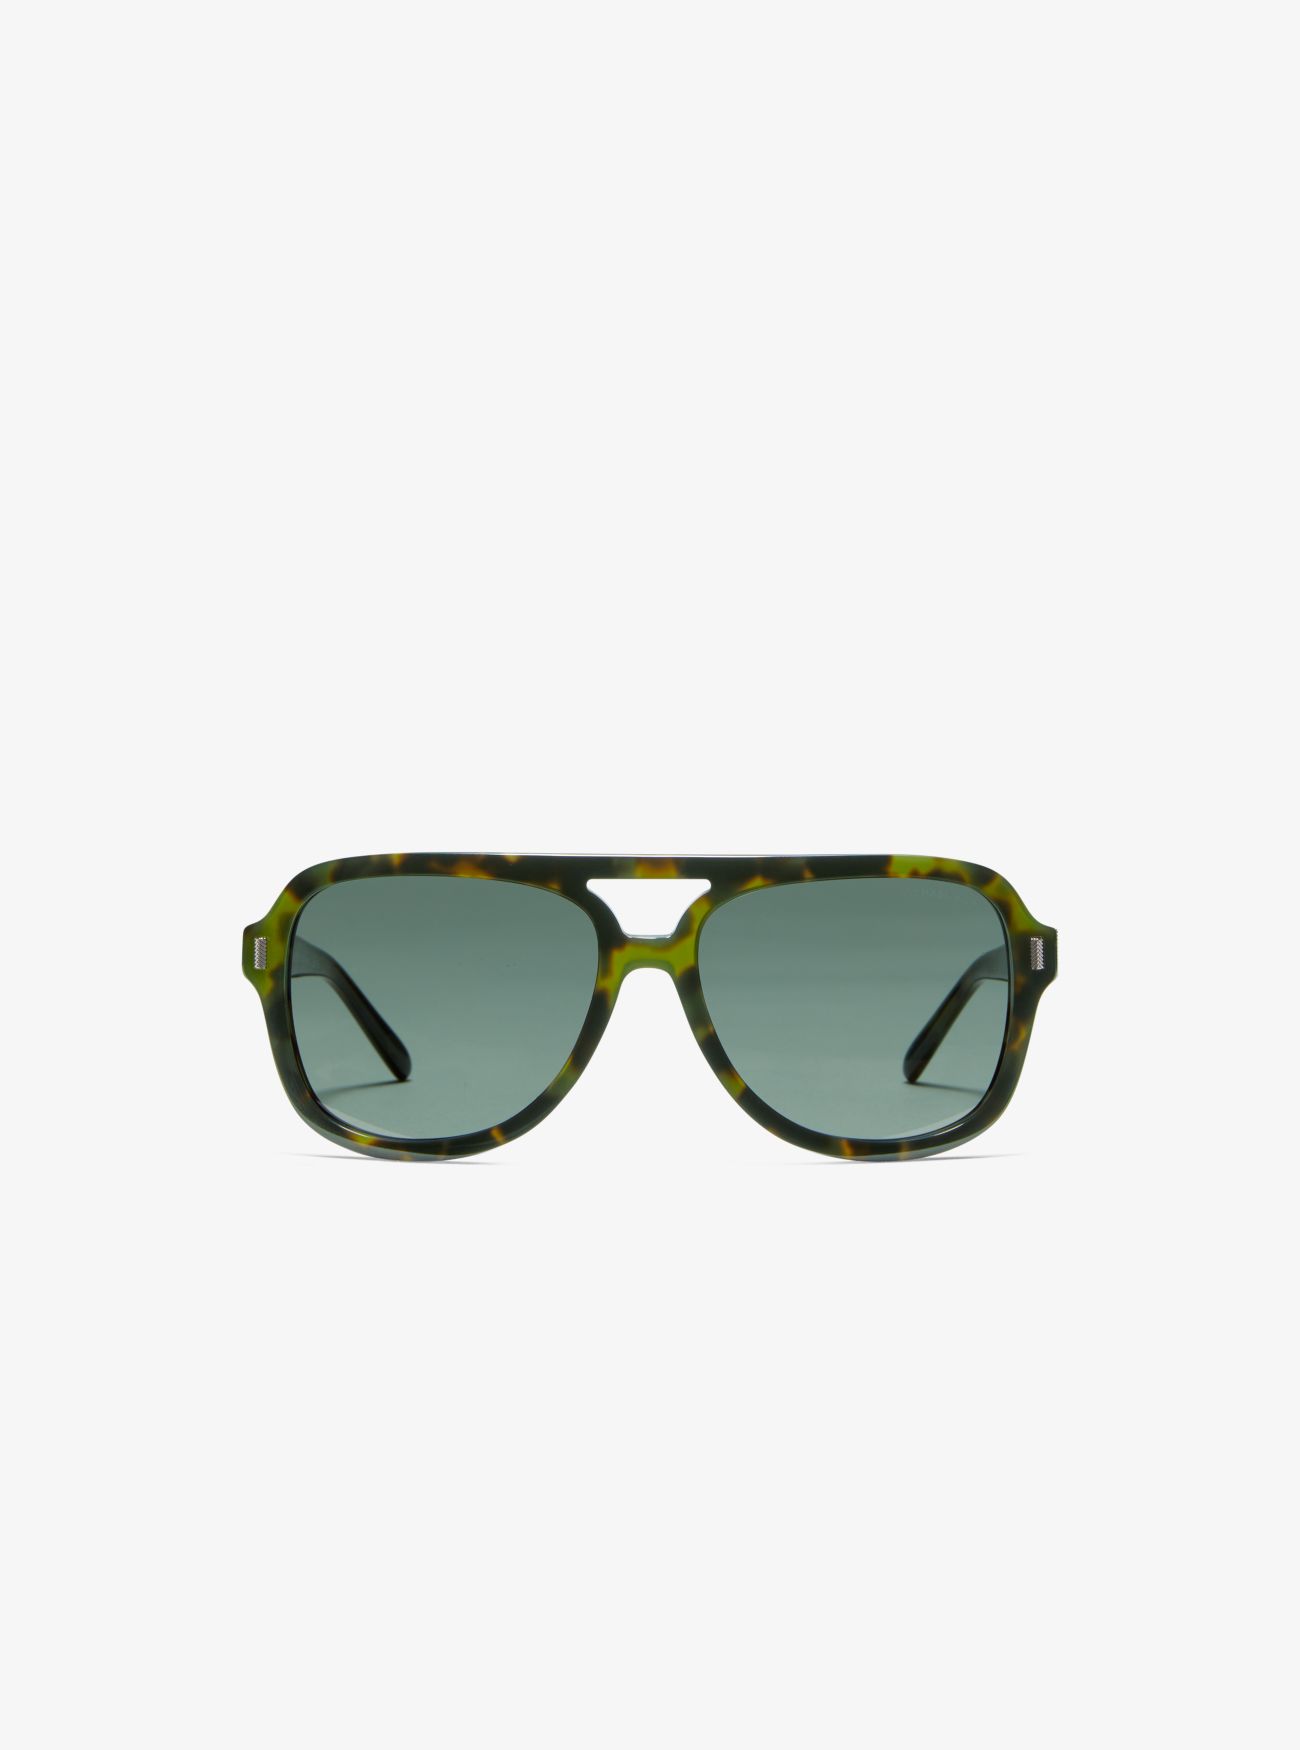 MK Durango Sunglasses - Green - Michael Kors